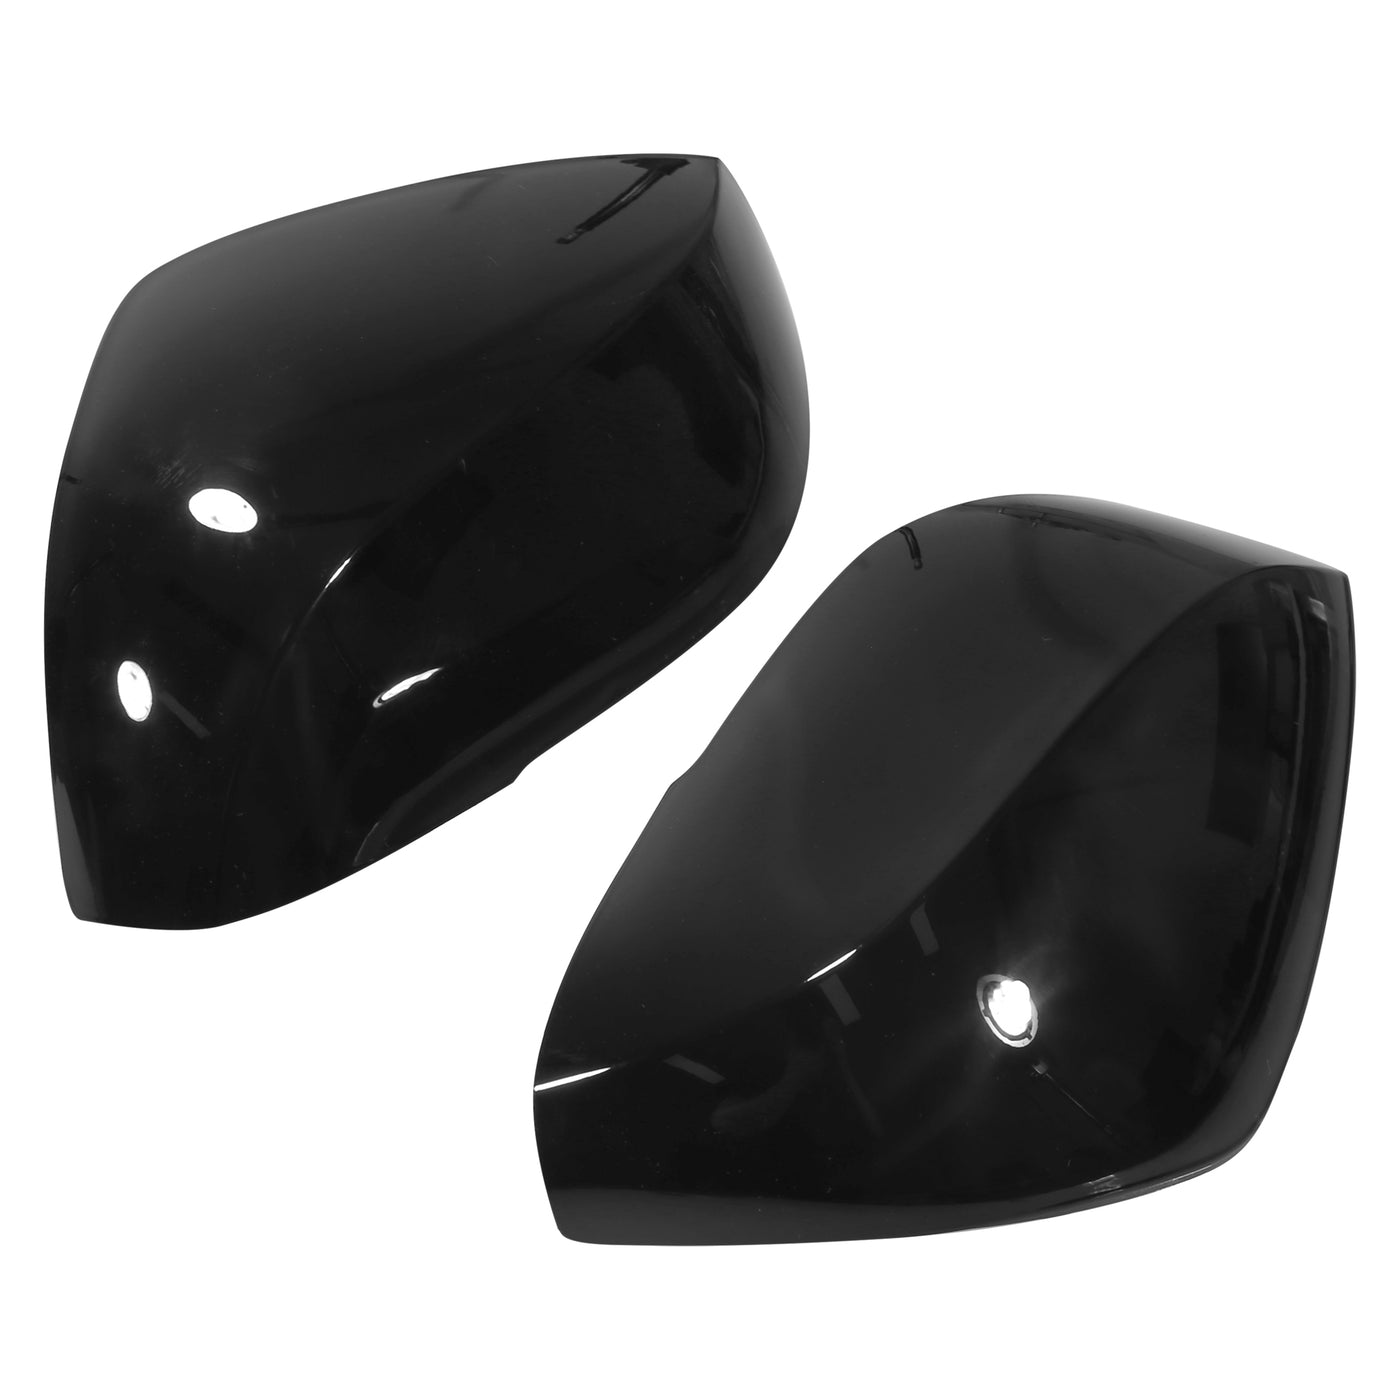 X AUTOHAUX Pair Car Exterior Rear View Mirror Covers Cap Replacement for Infiniti Q50 Q60 Q70 QX30 2014-2021 Gloss Black